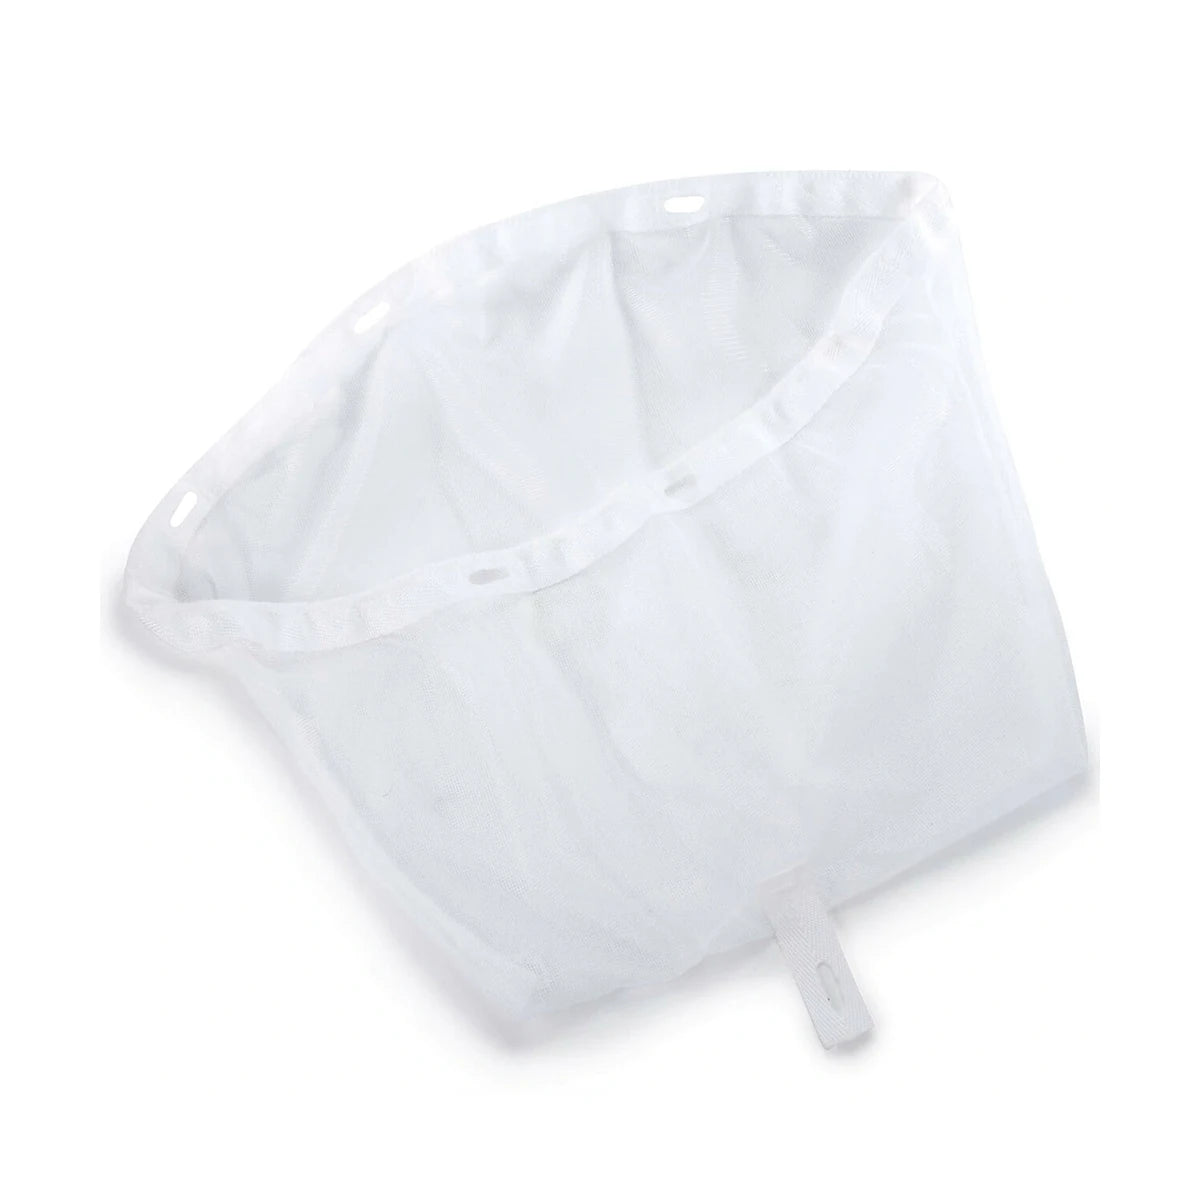 Debris Attachment Bag for 2012+ Jacuzzi® Models - Hot Tub Store